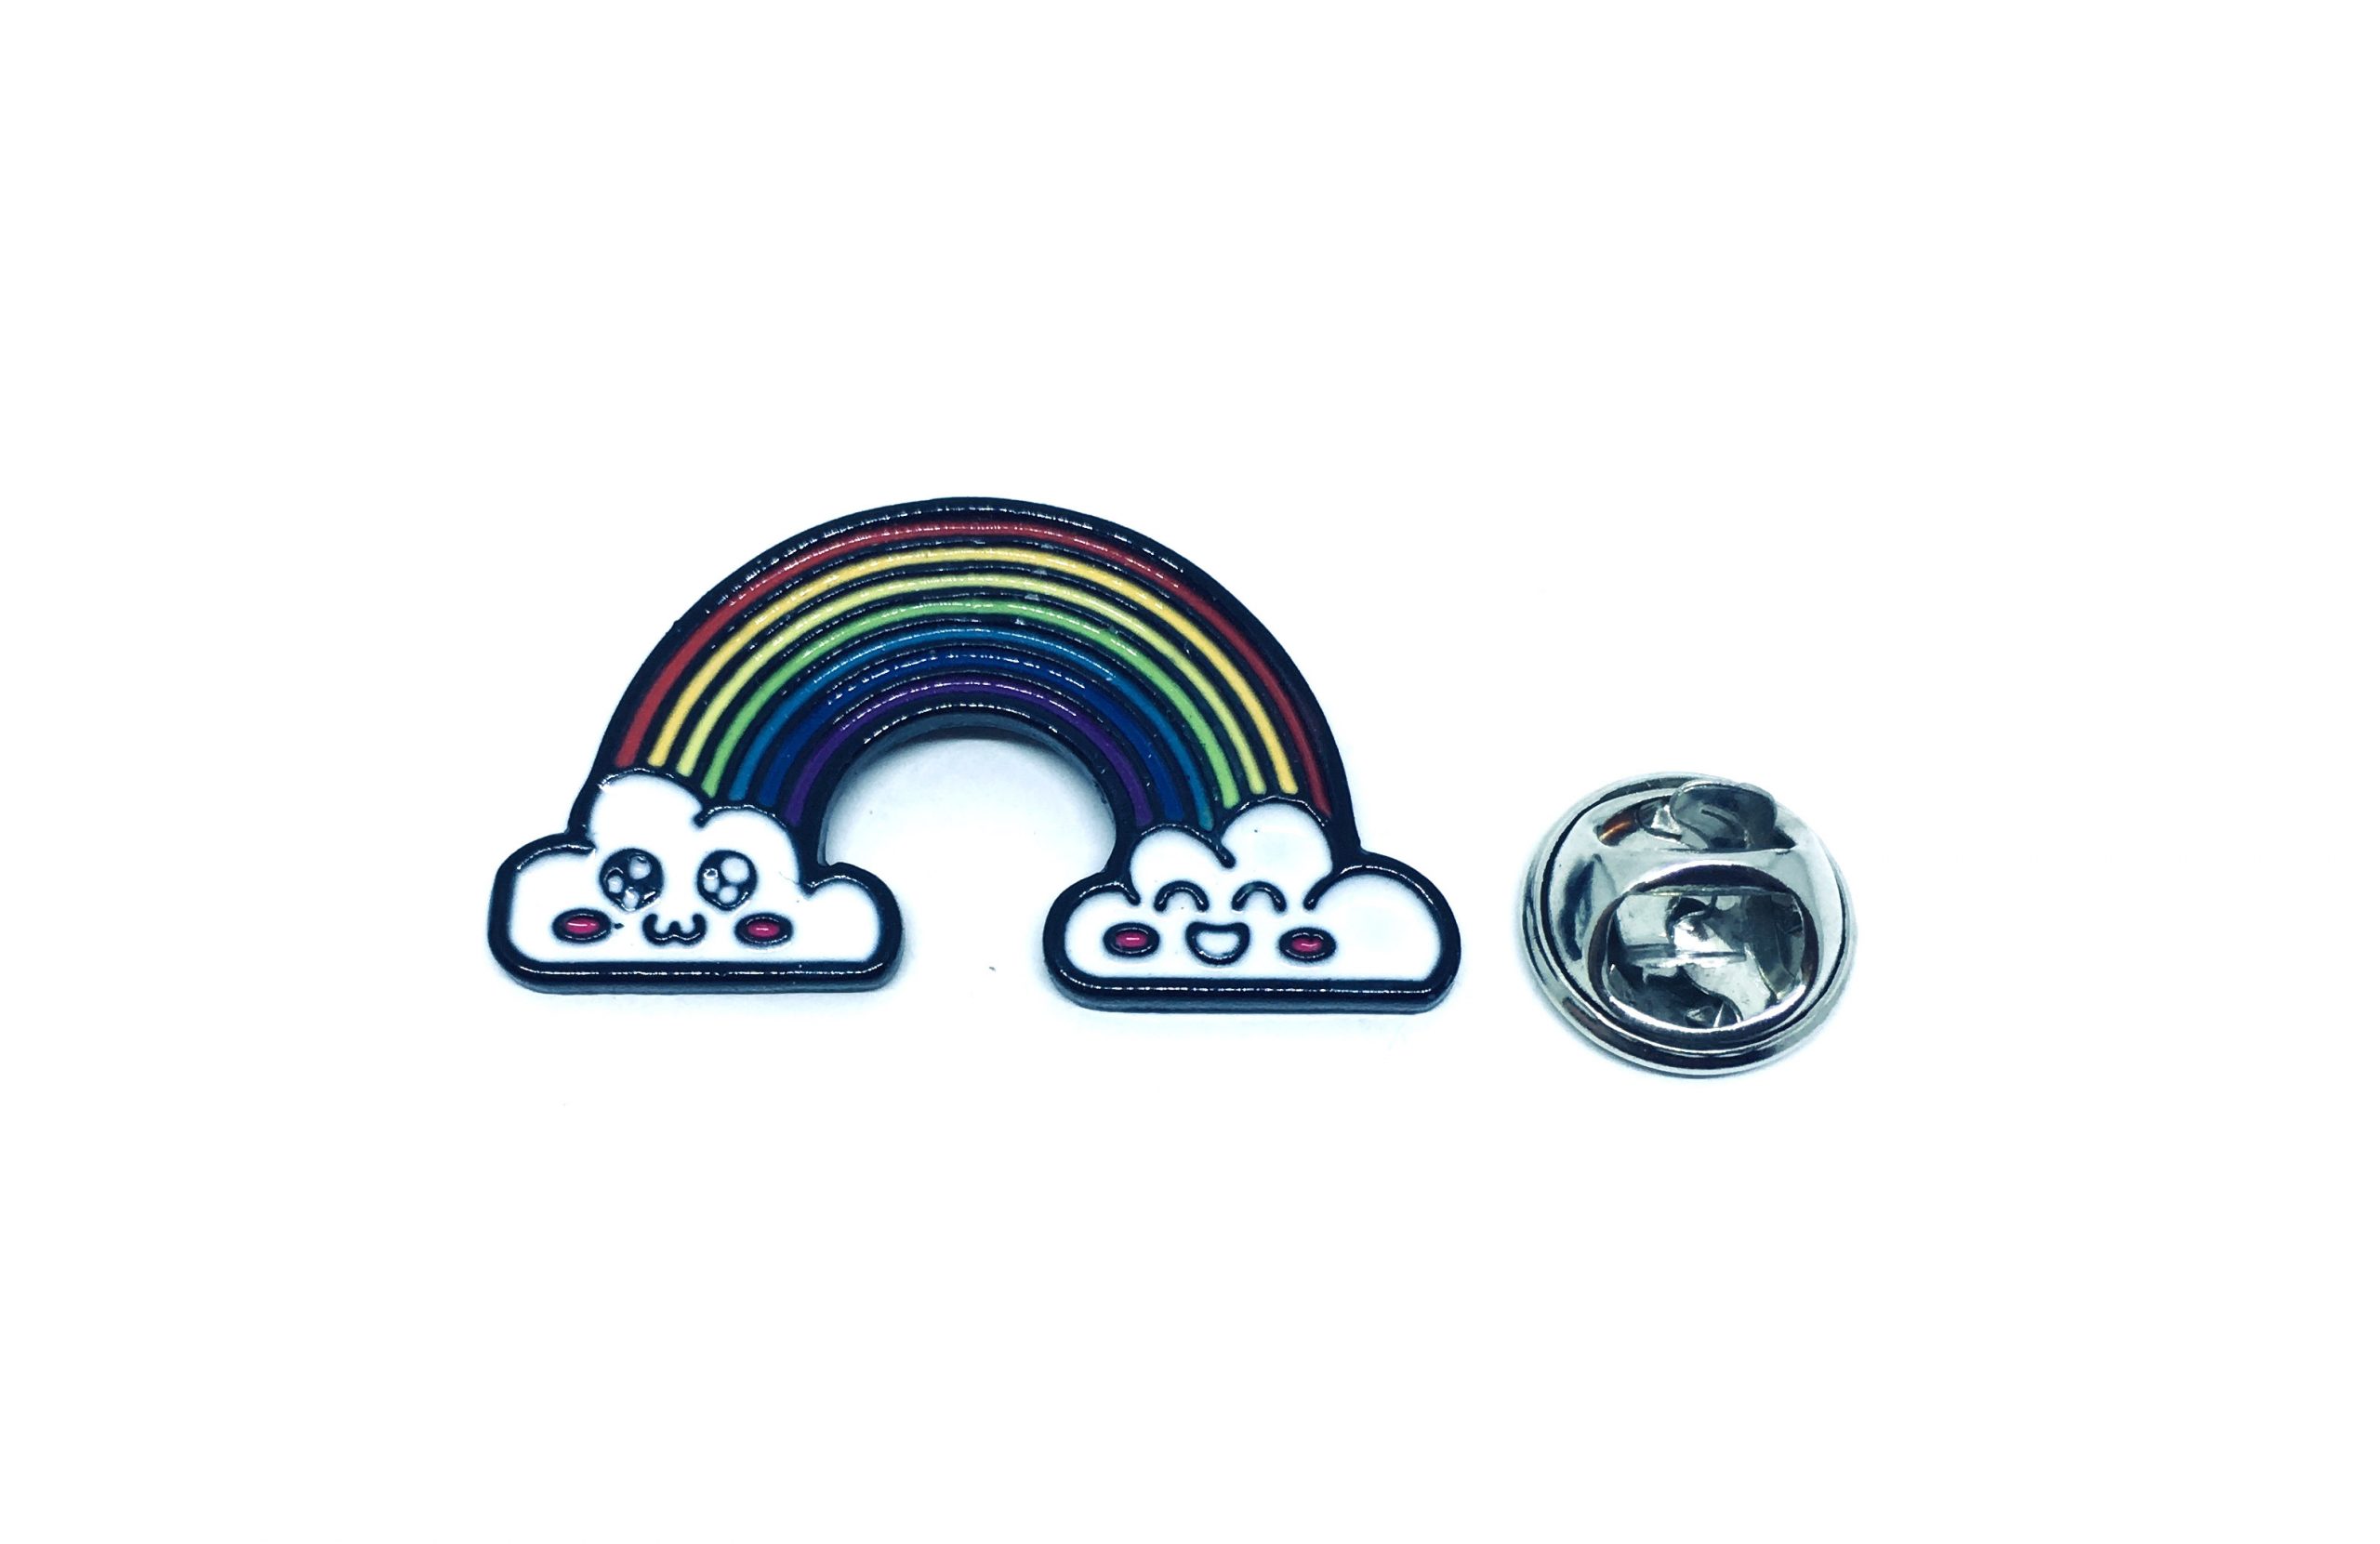 Rainbow Enamel Lapel Pin